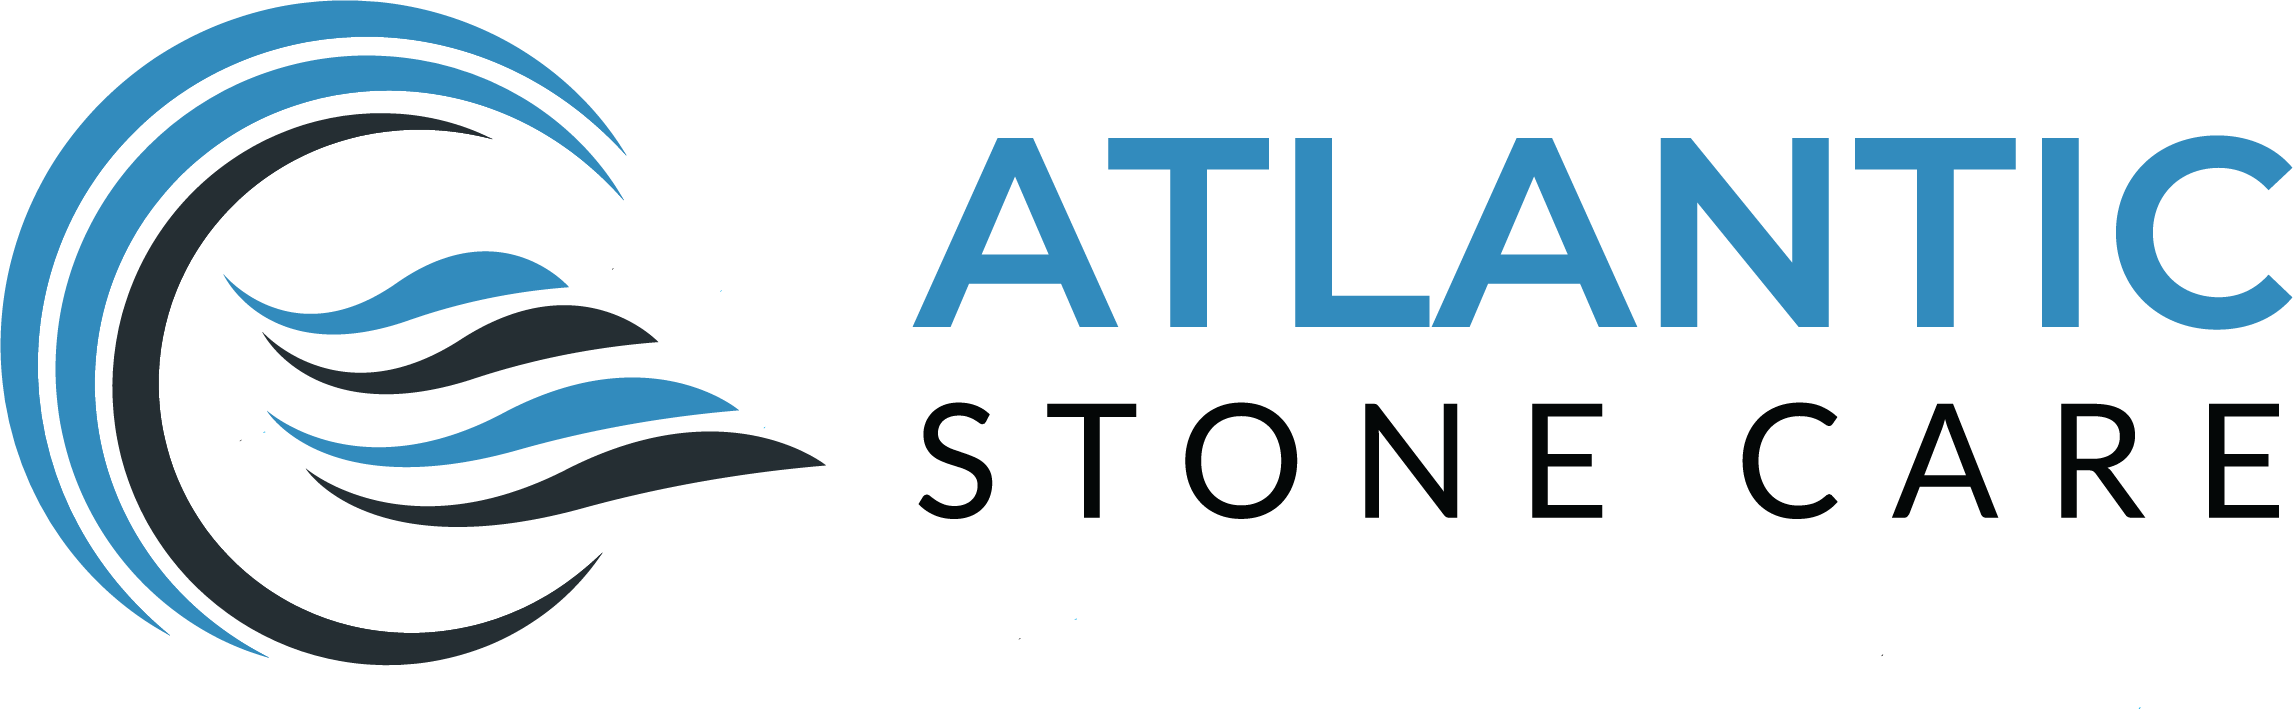 Atlantic Stone Care - Masonry Contractor in Vancouver, BC